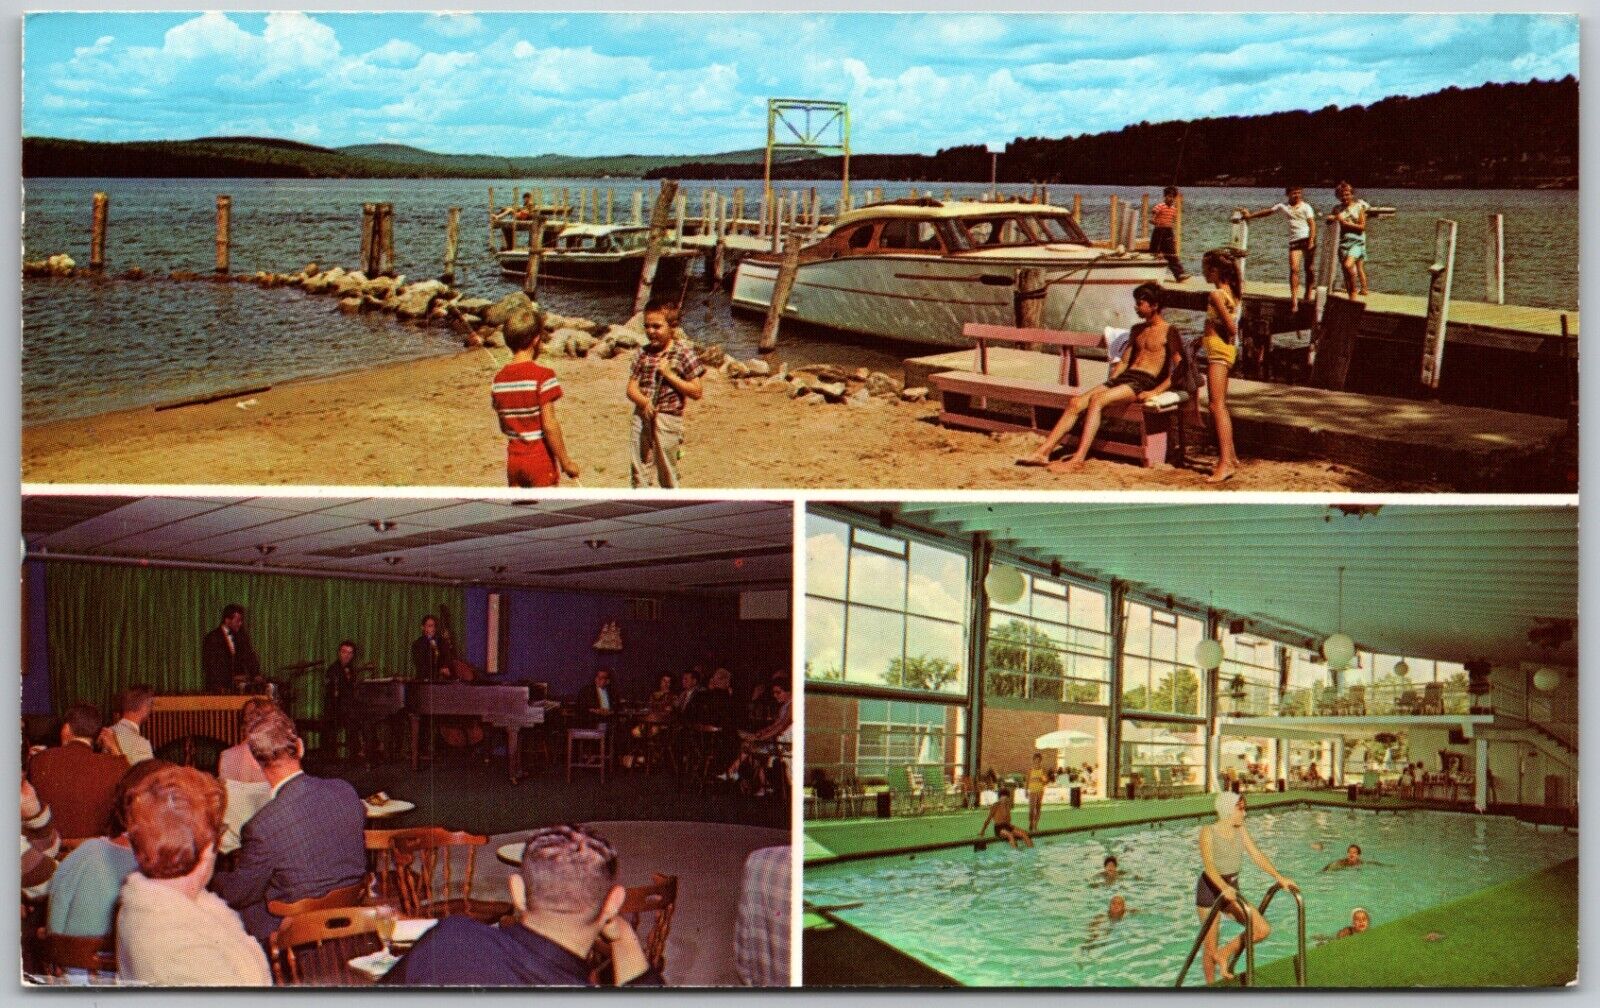 Margate 4-Season Lakefront Resort - Laconia New Hampshire - Postcard 7304